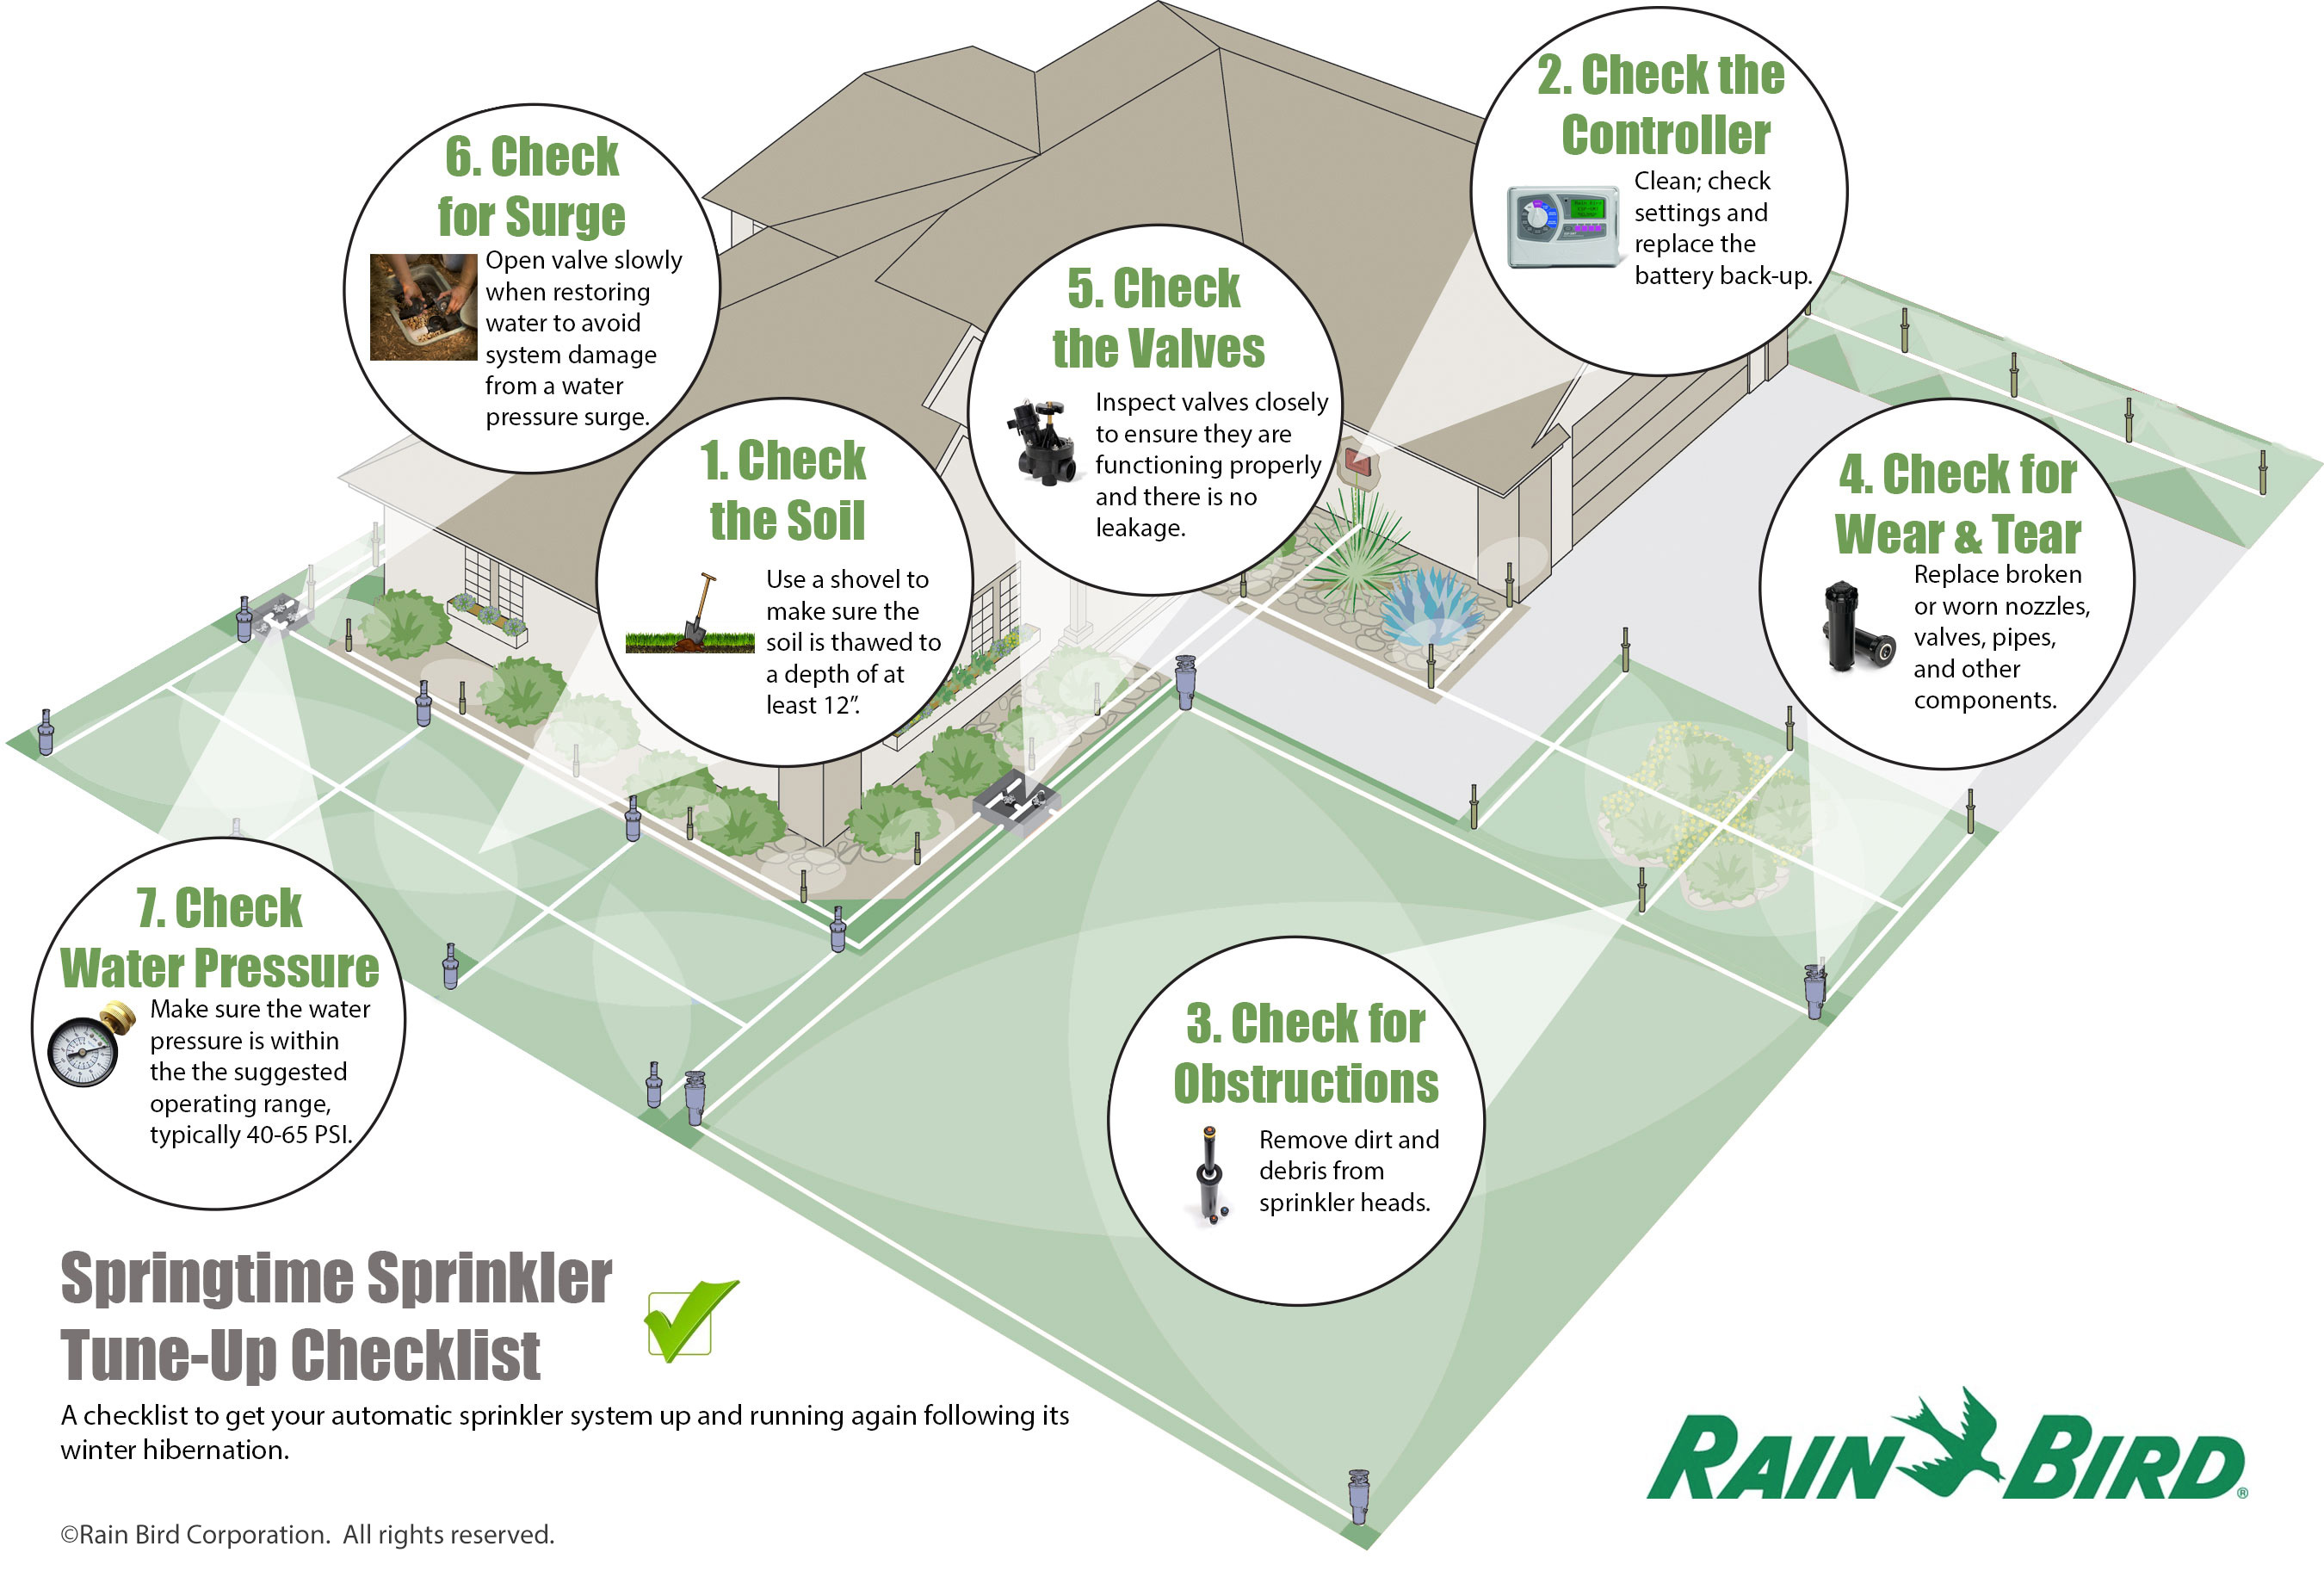 2018.04.19-Raintree-Irrigation-Infographic-RainBirdSprinklerTuneUp